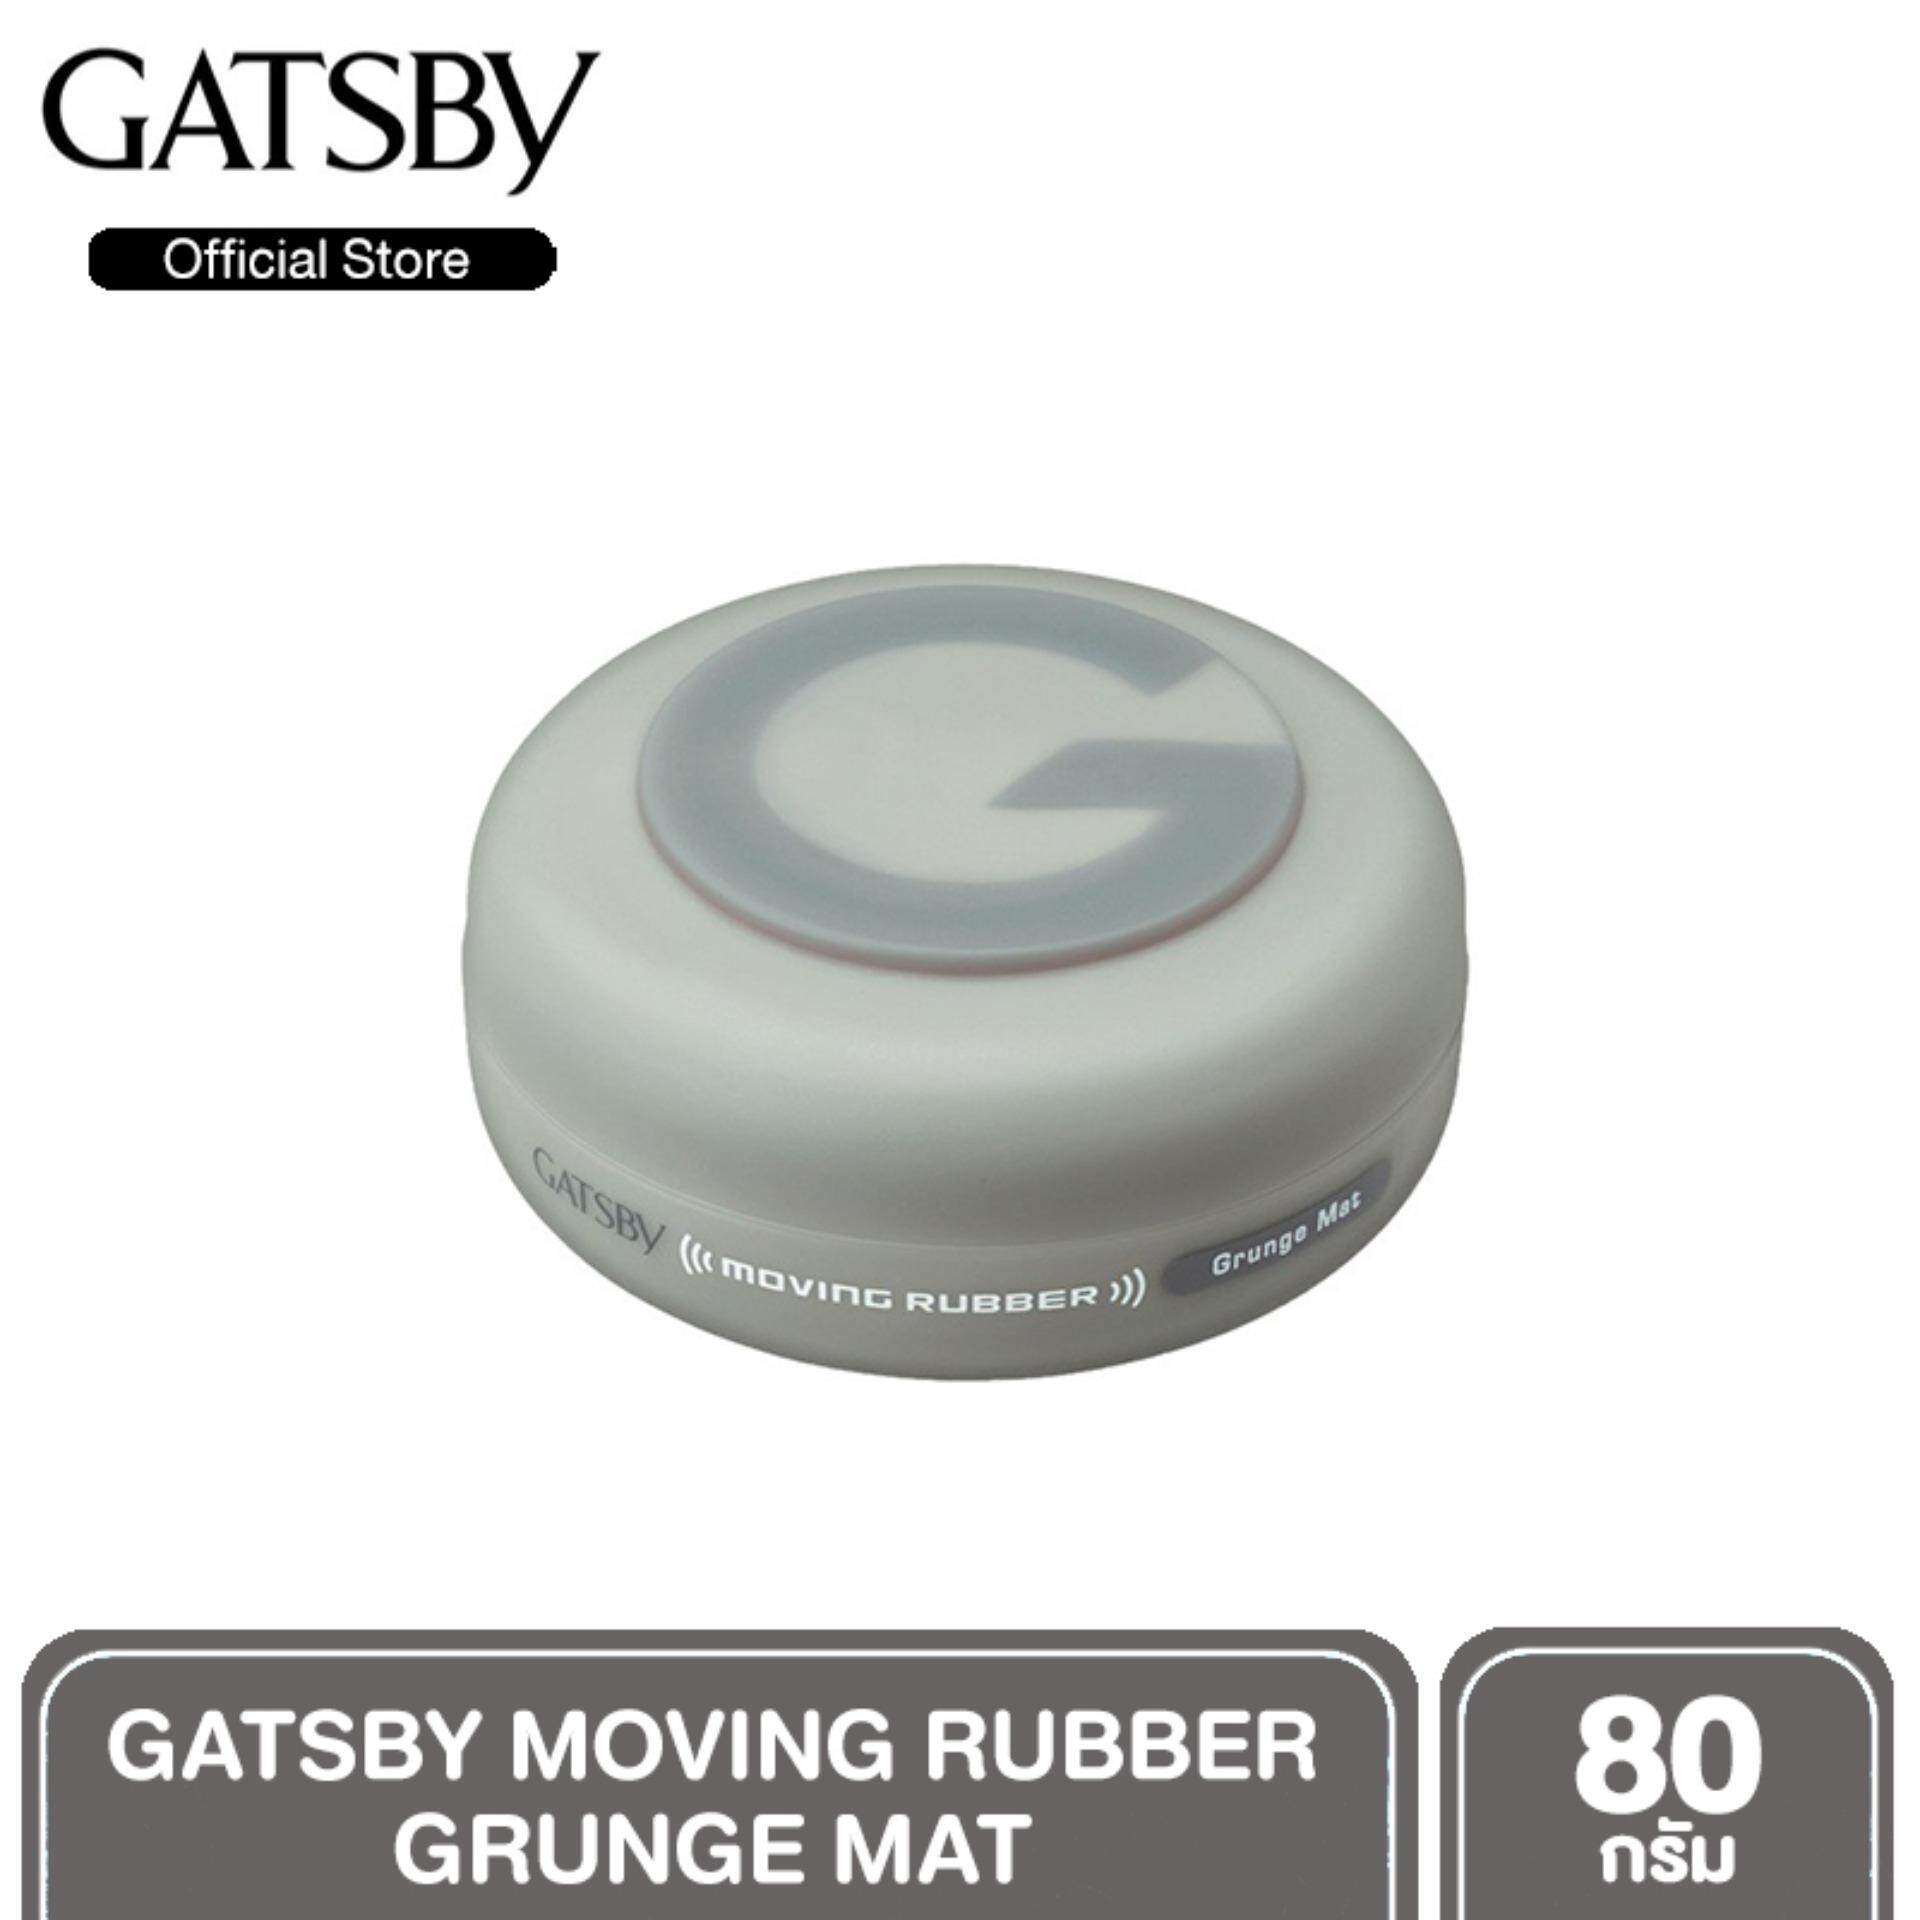 GATSBY MOVING RUBBER แกสบี้ มูฟวิ่ง รับเบอร์ รับเบอร์แว็กซ์เนื้อบางเบา จัดทรงง่าย 80 g. สูตร GRUNGE MAT